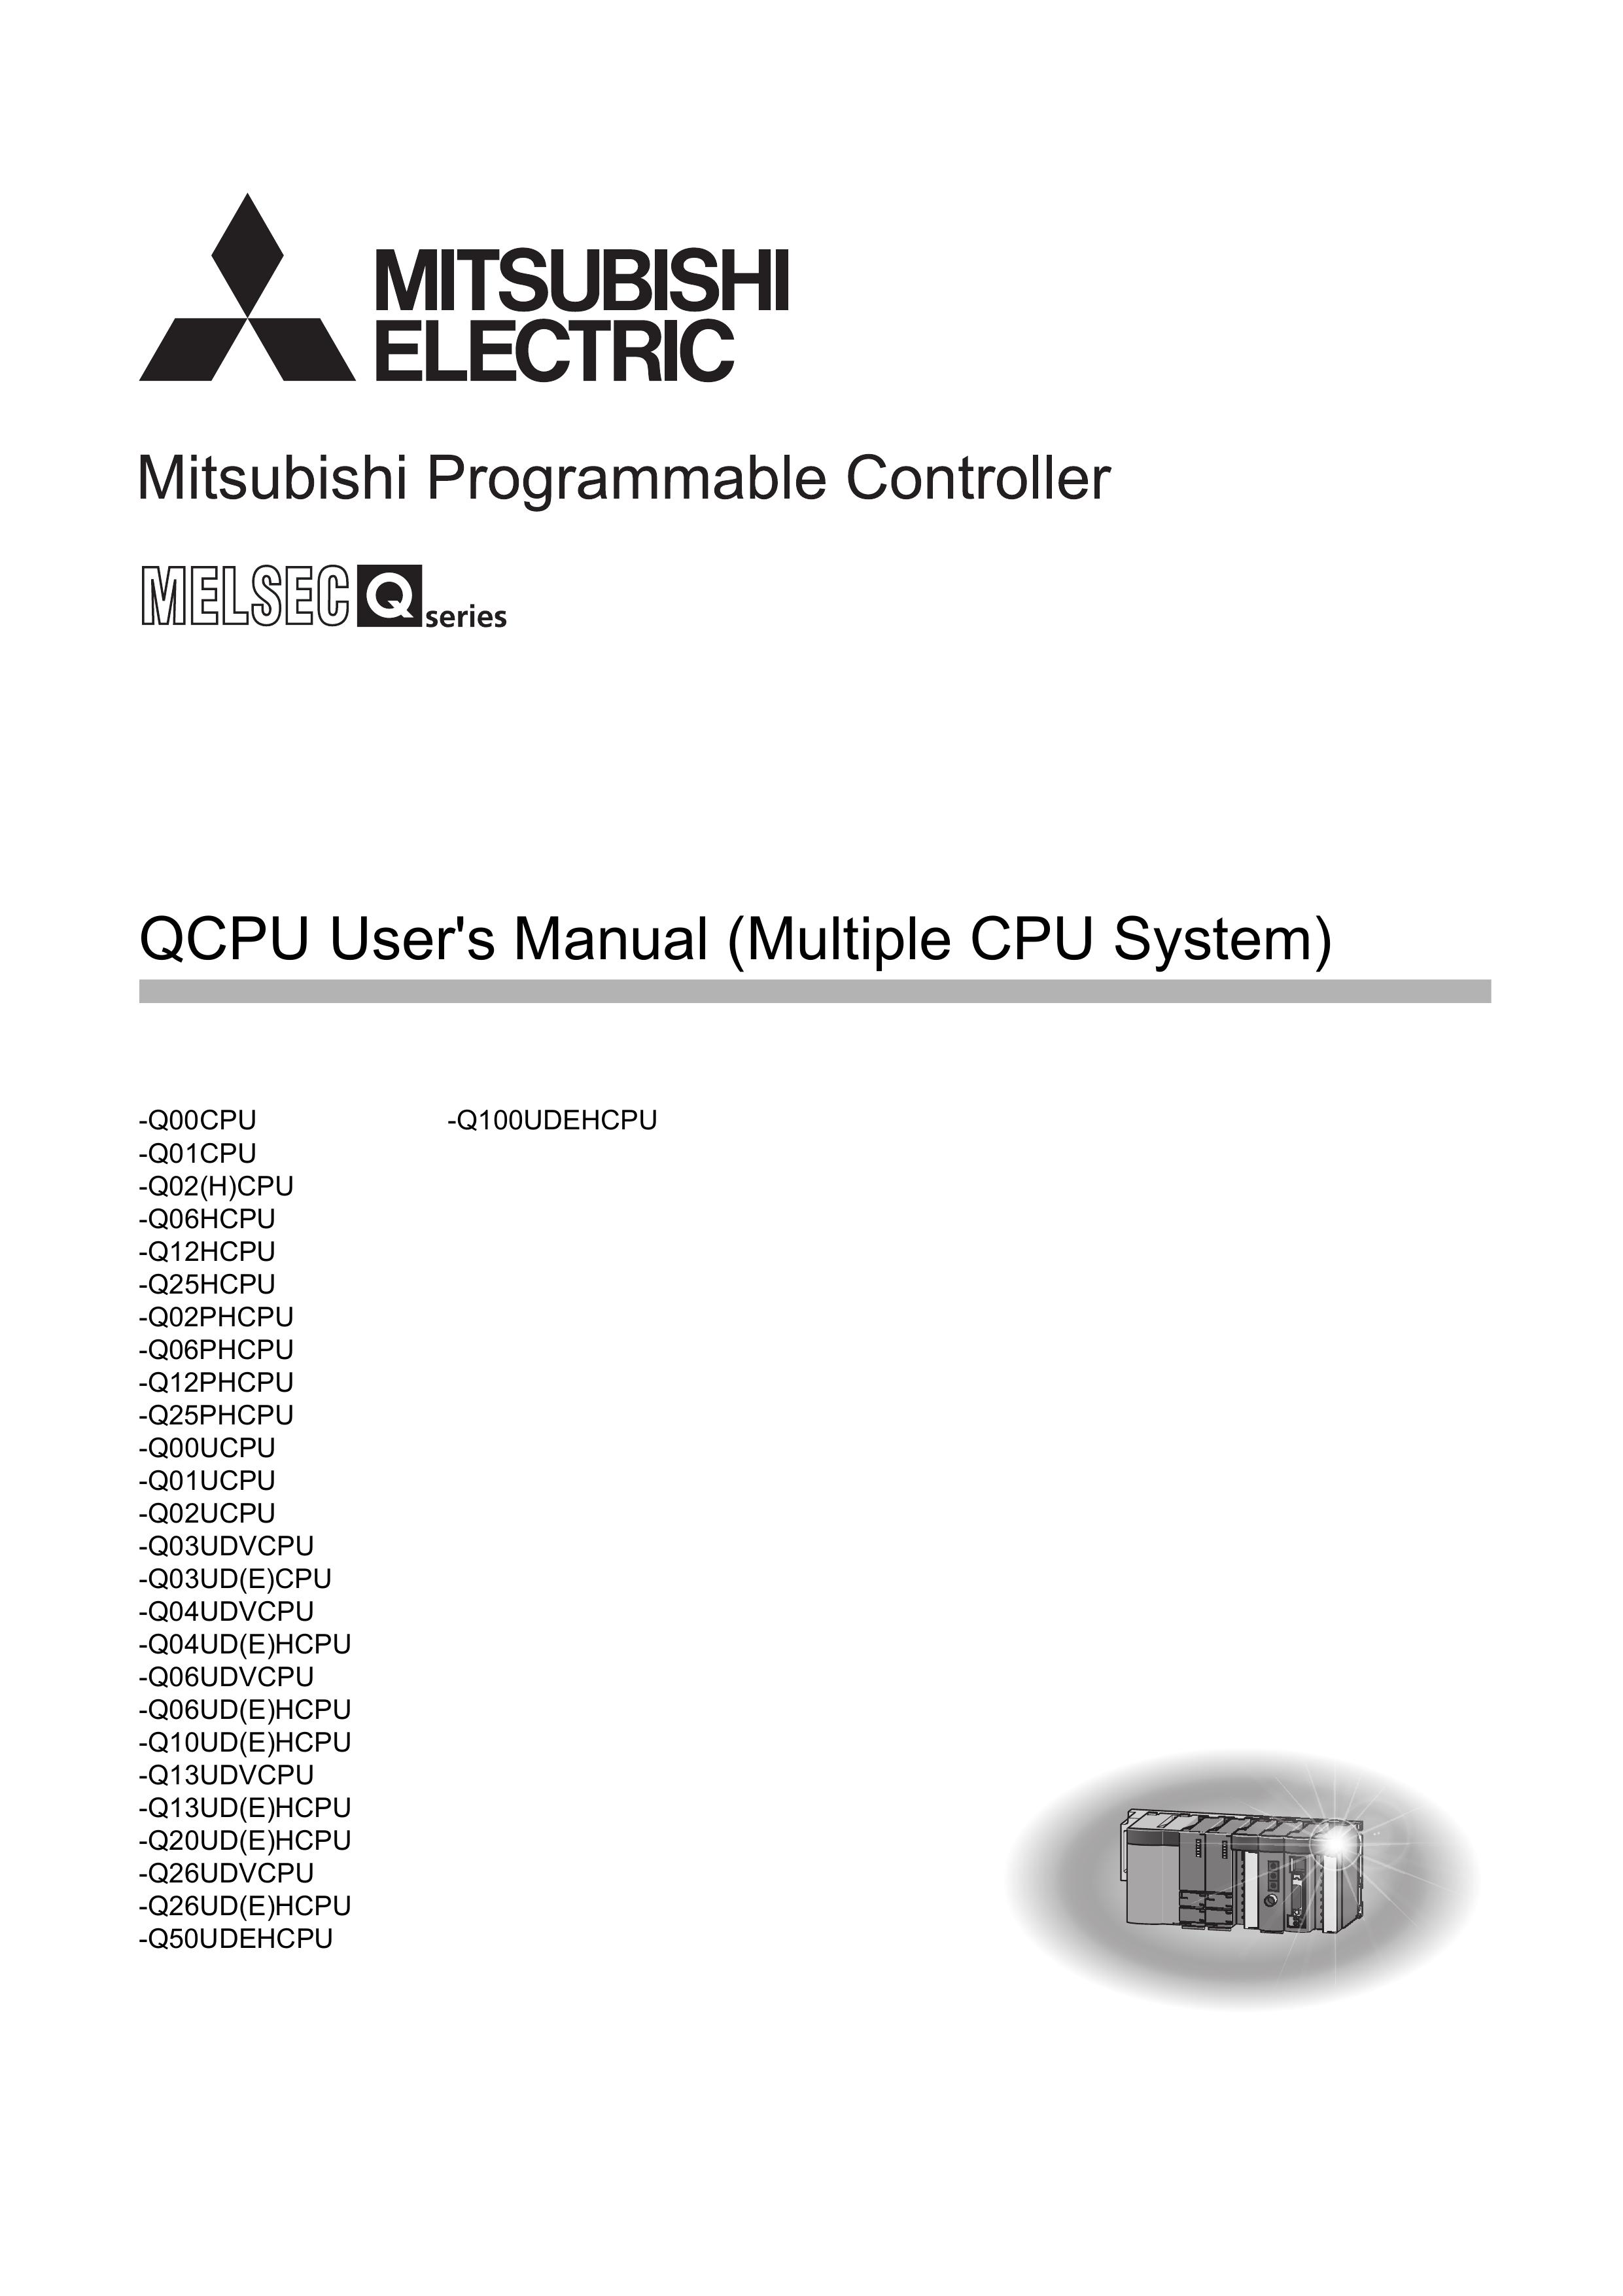 Mitsubishi Electronics Q26UD(E)HCPU Sleep Apnea Machine User Manual